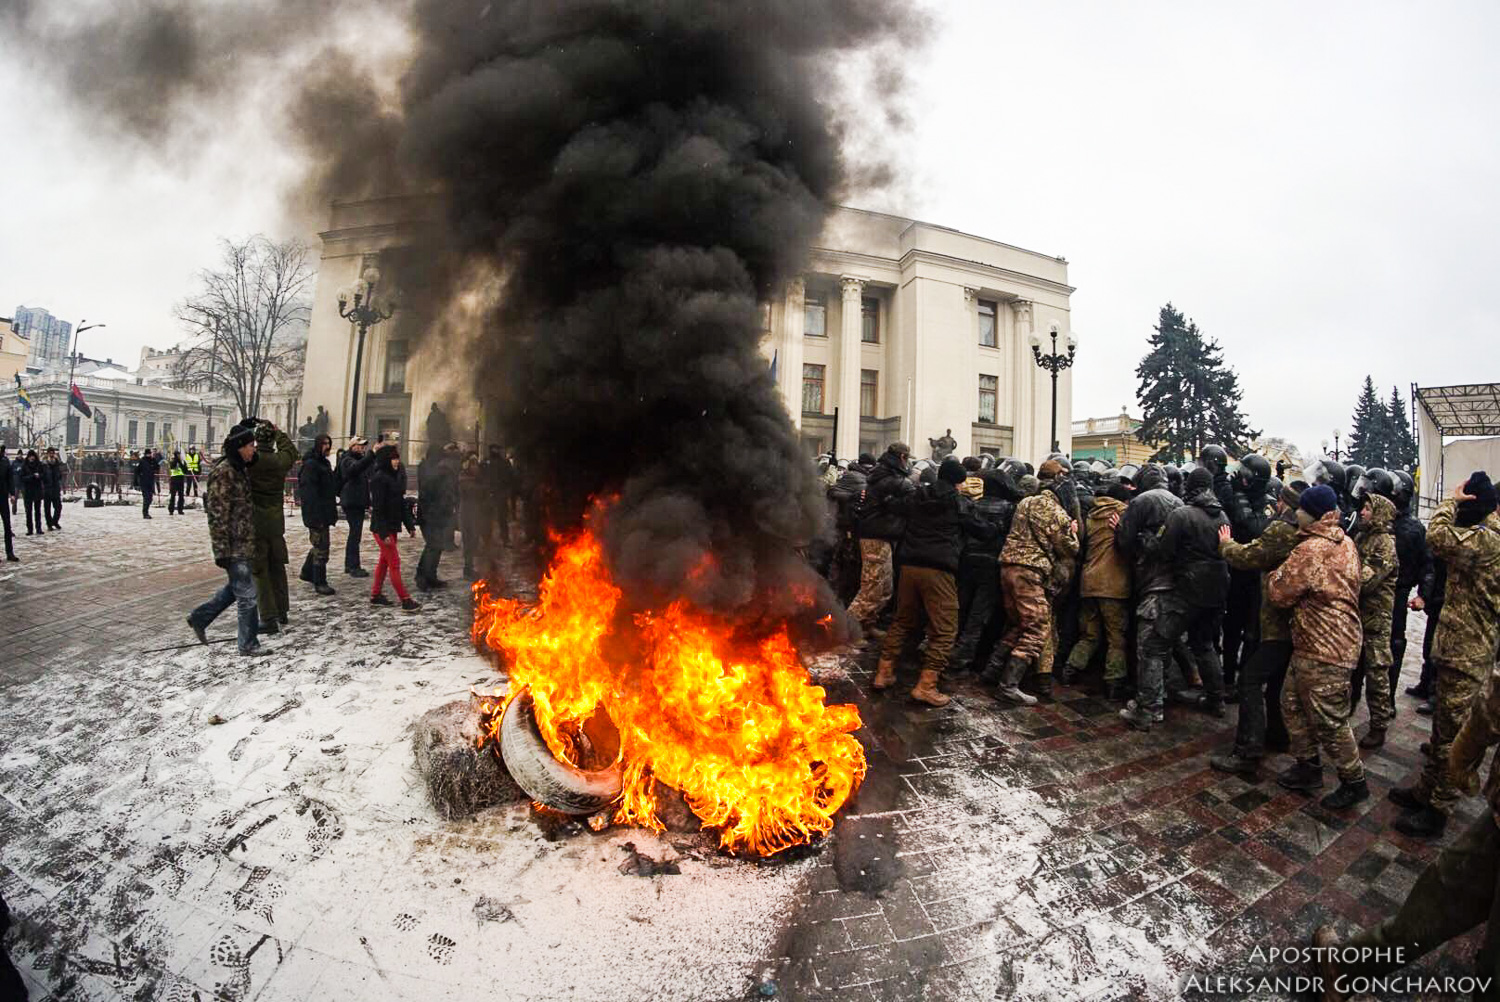 NATO - Ukraine News in brief. Tuesday 16 January. [Ukrainian sources] C2679b042f6179dafa99cb620d164298